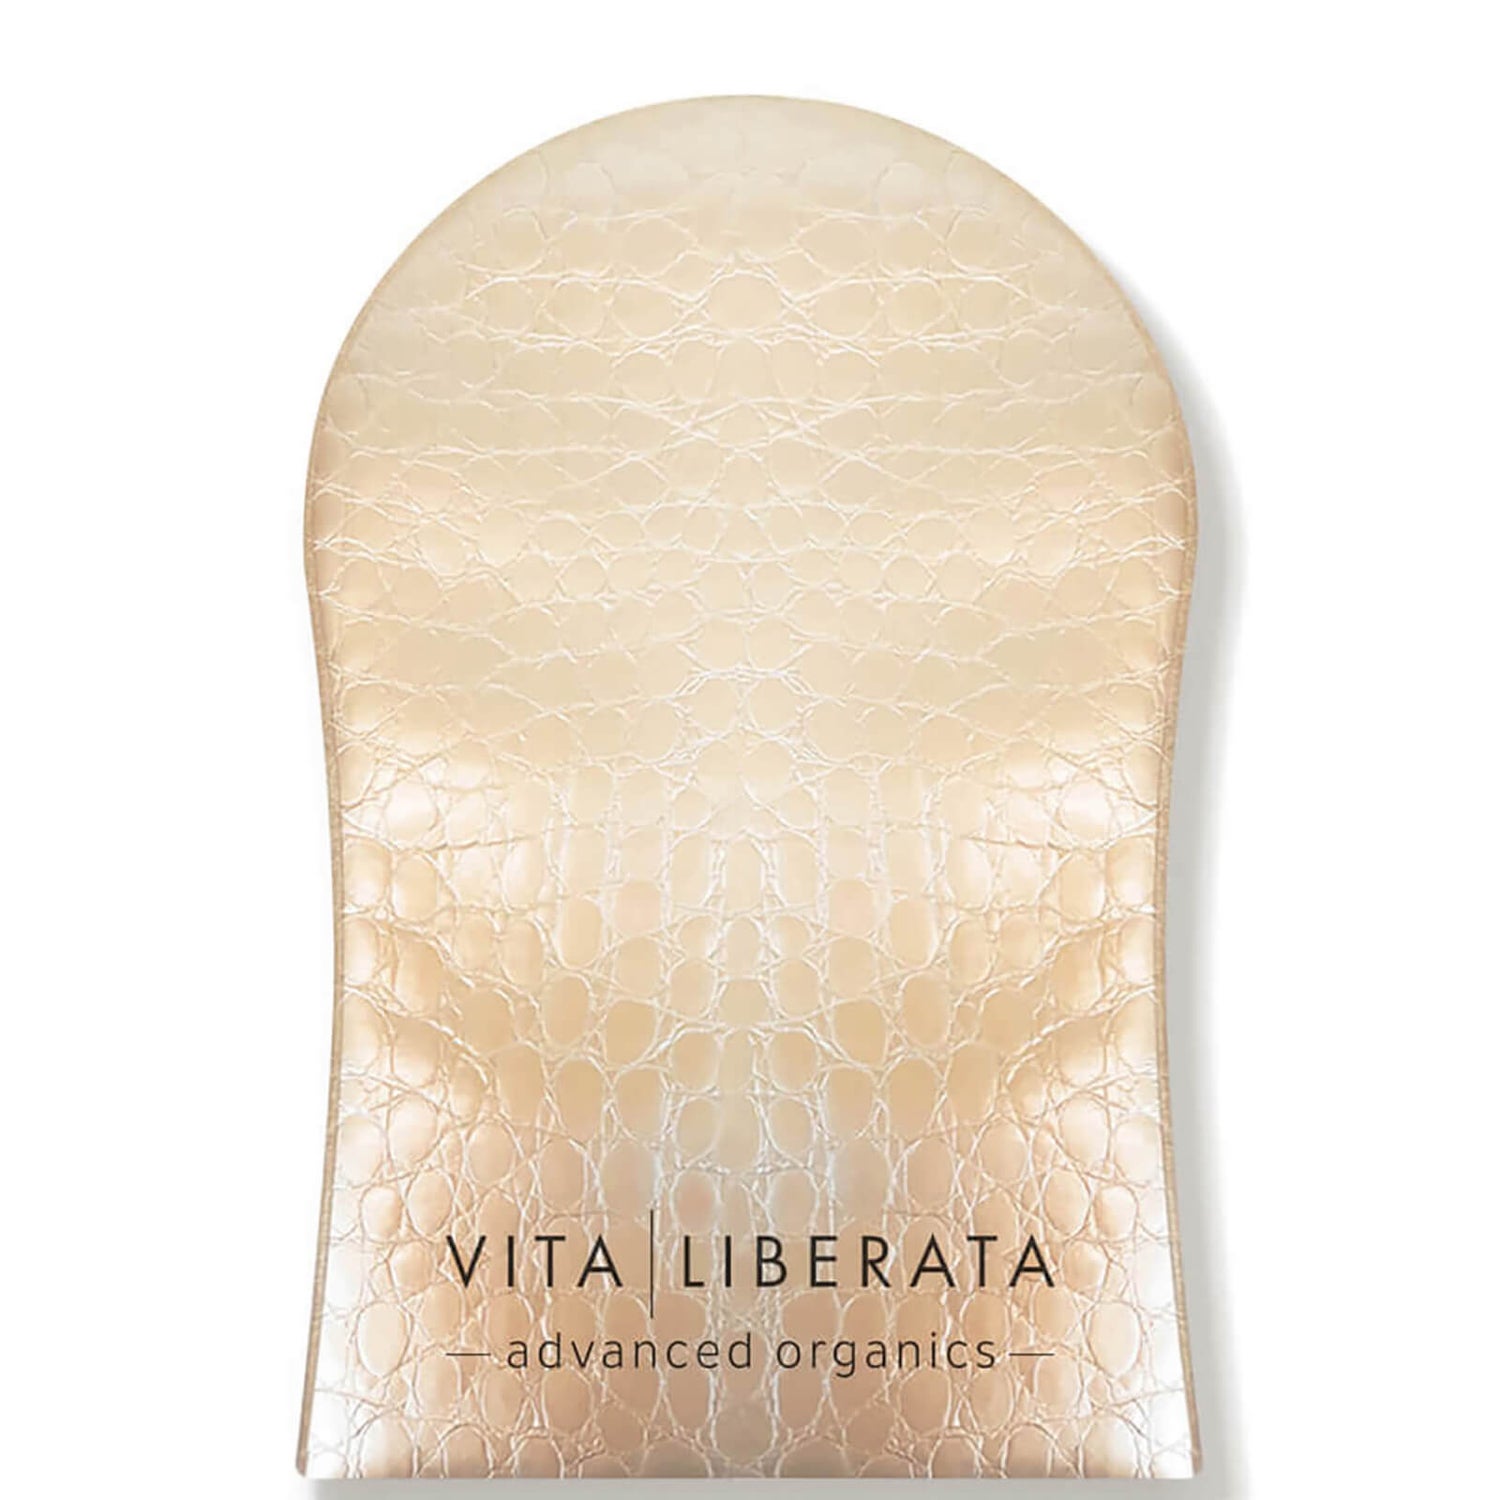 Gant de bronzage Vita Liberata - Taille unique.